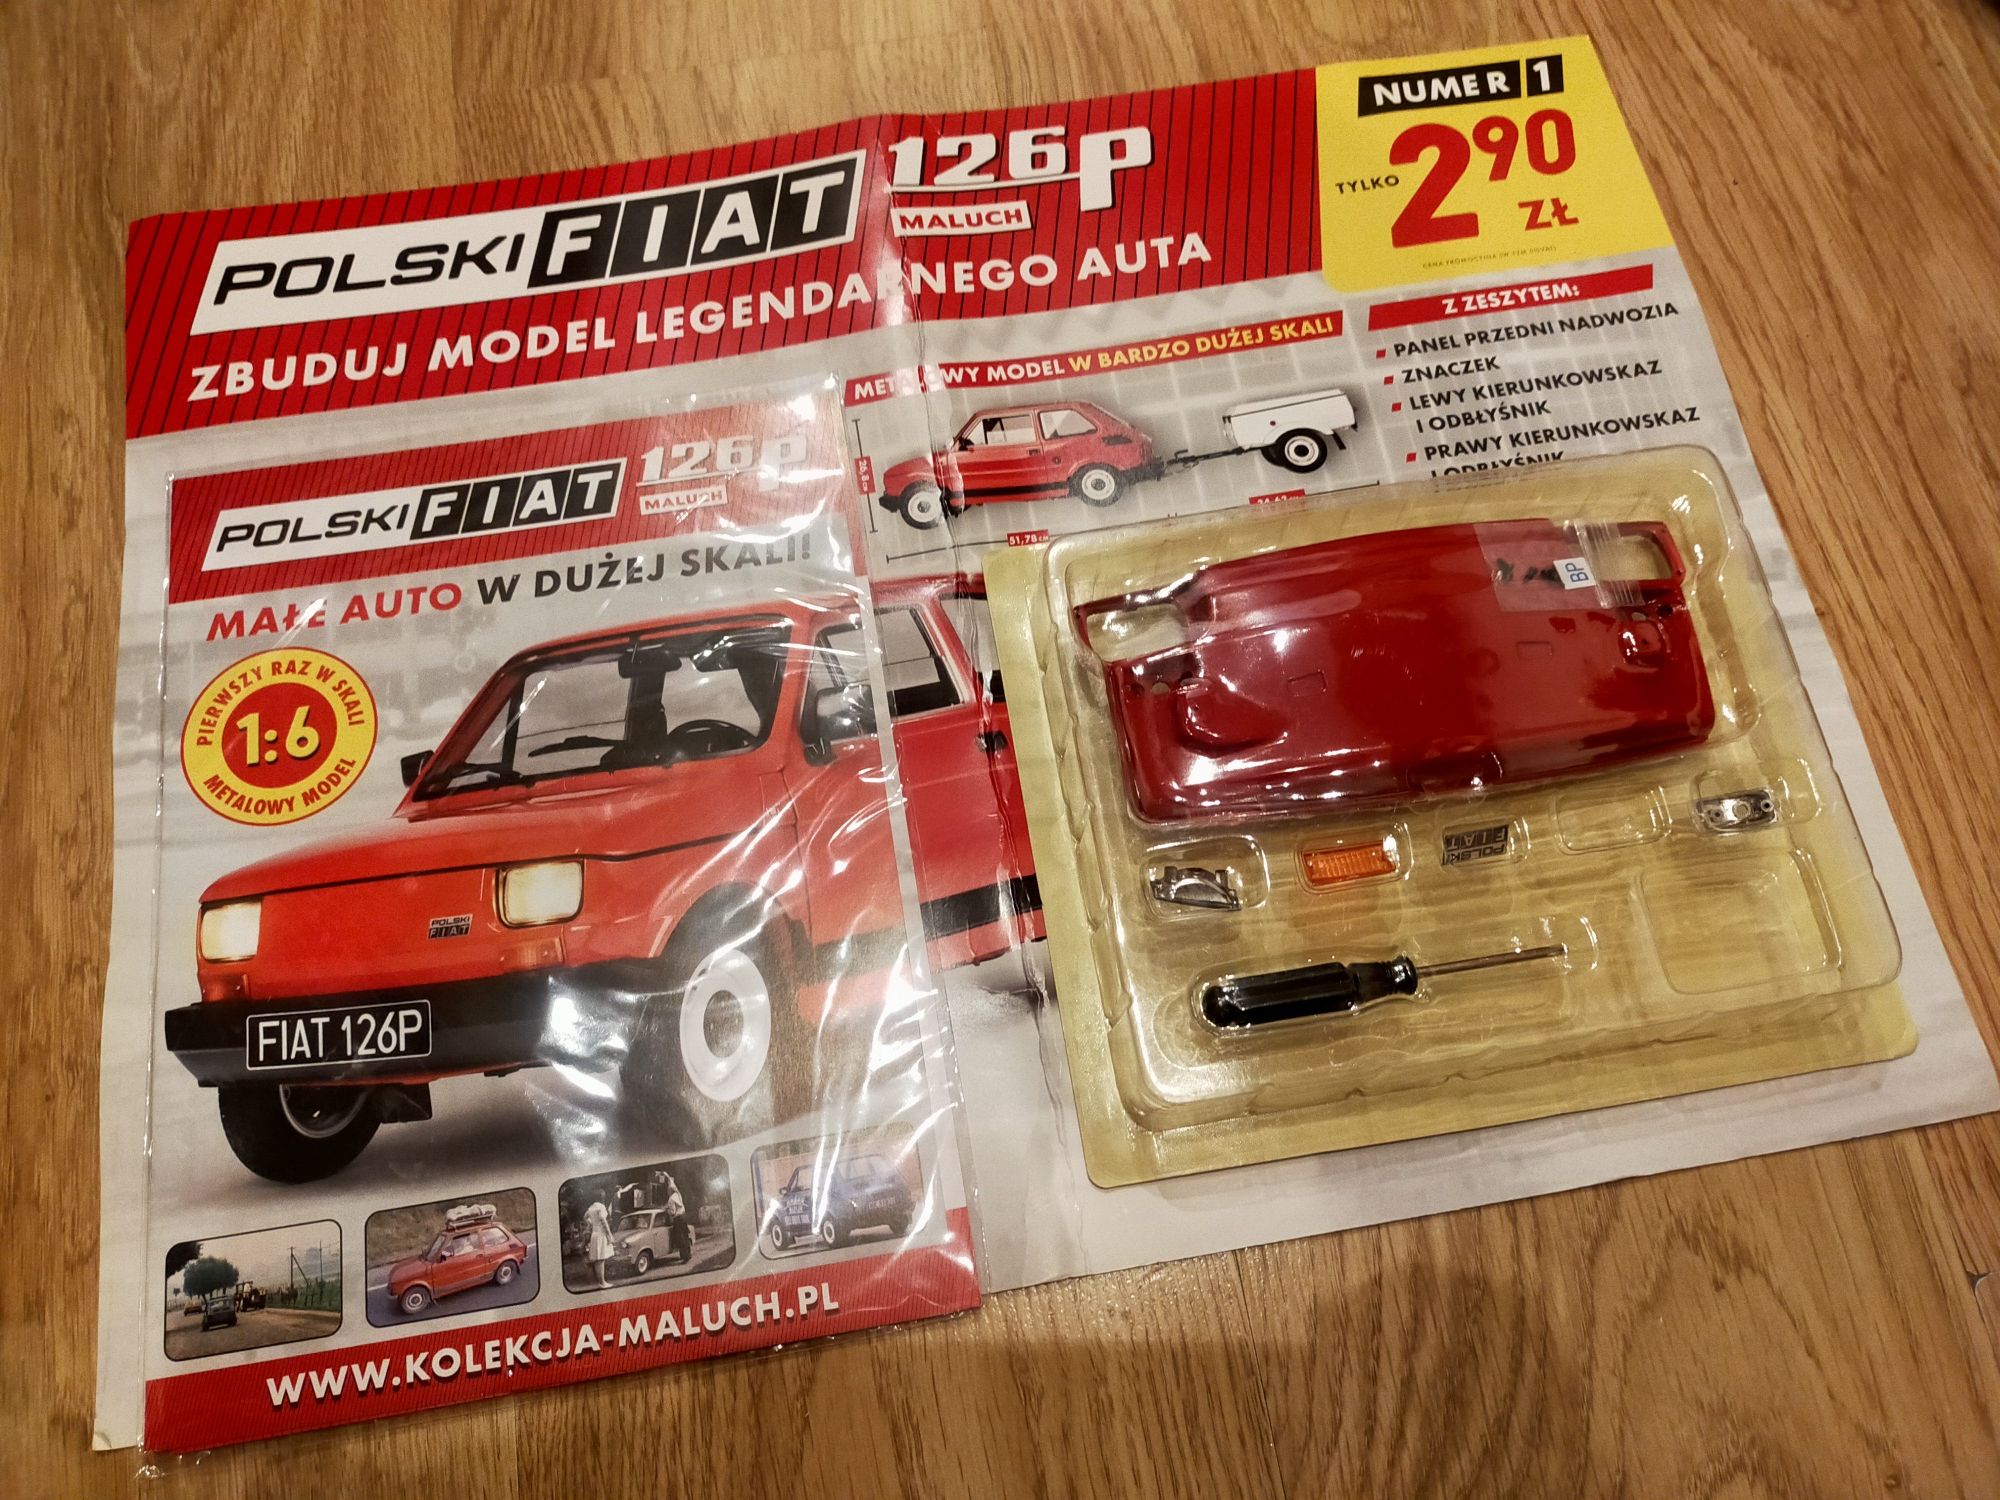 Numer 1 zbuduj model Polski Fiat 126p Maluch Hachette 1:6